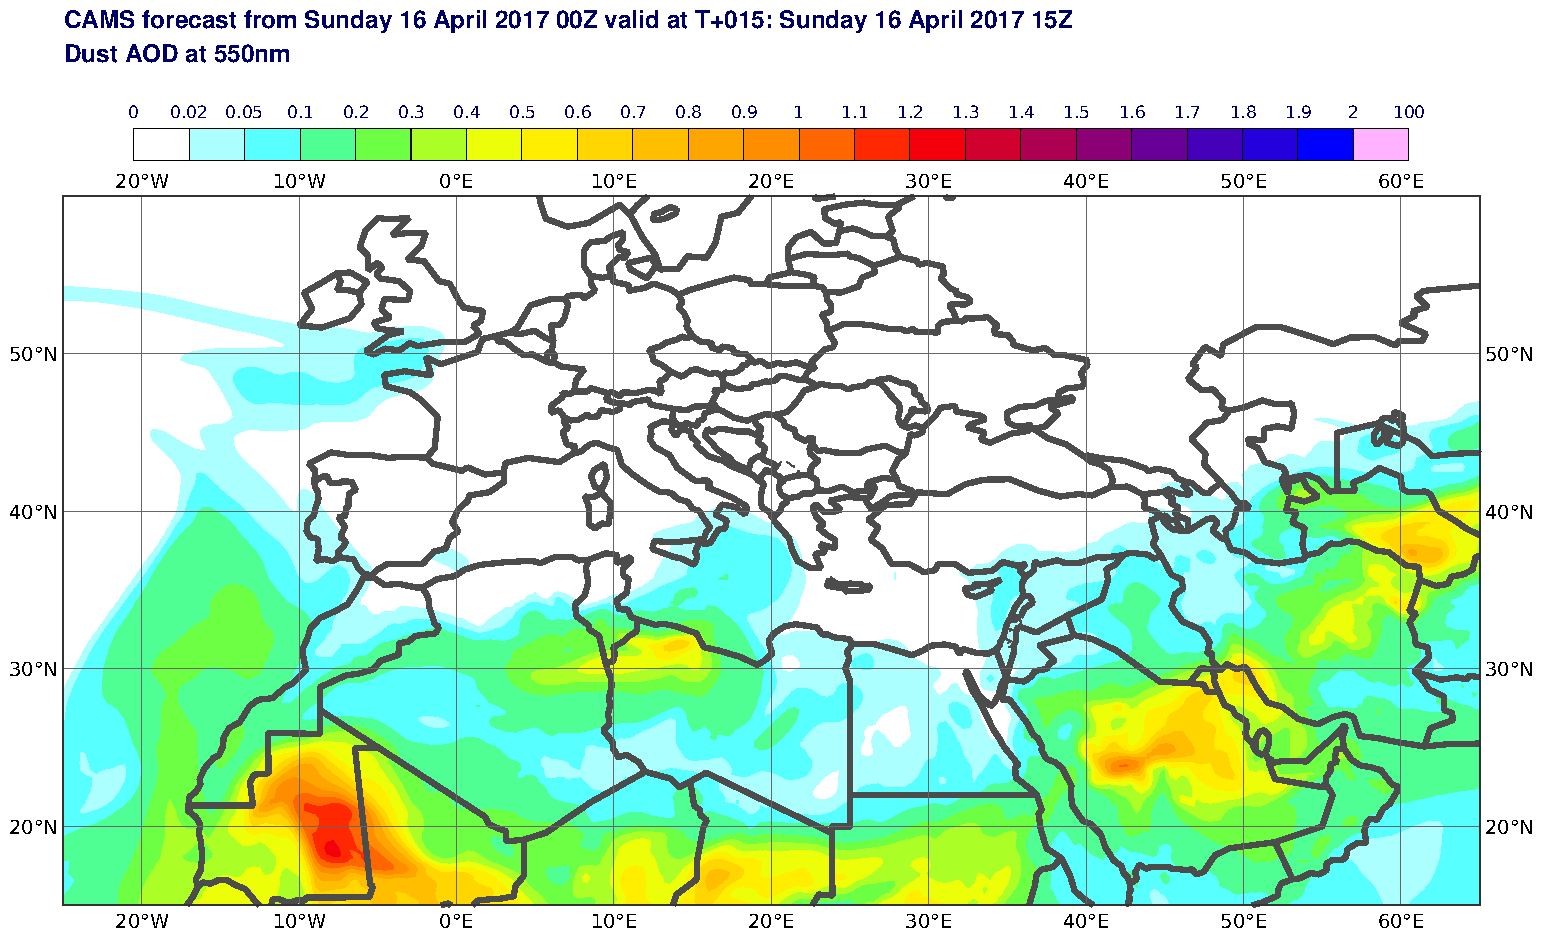 Dust AOD at 550nm valid at T15 - 2017-04-16 15:00